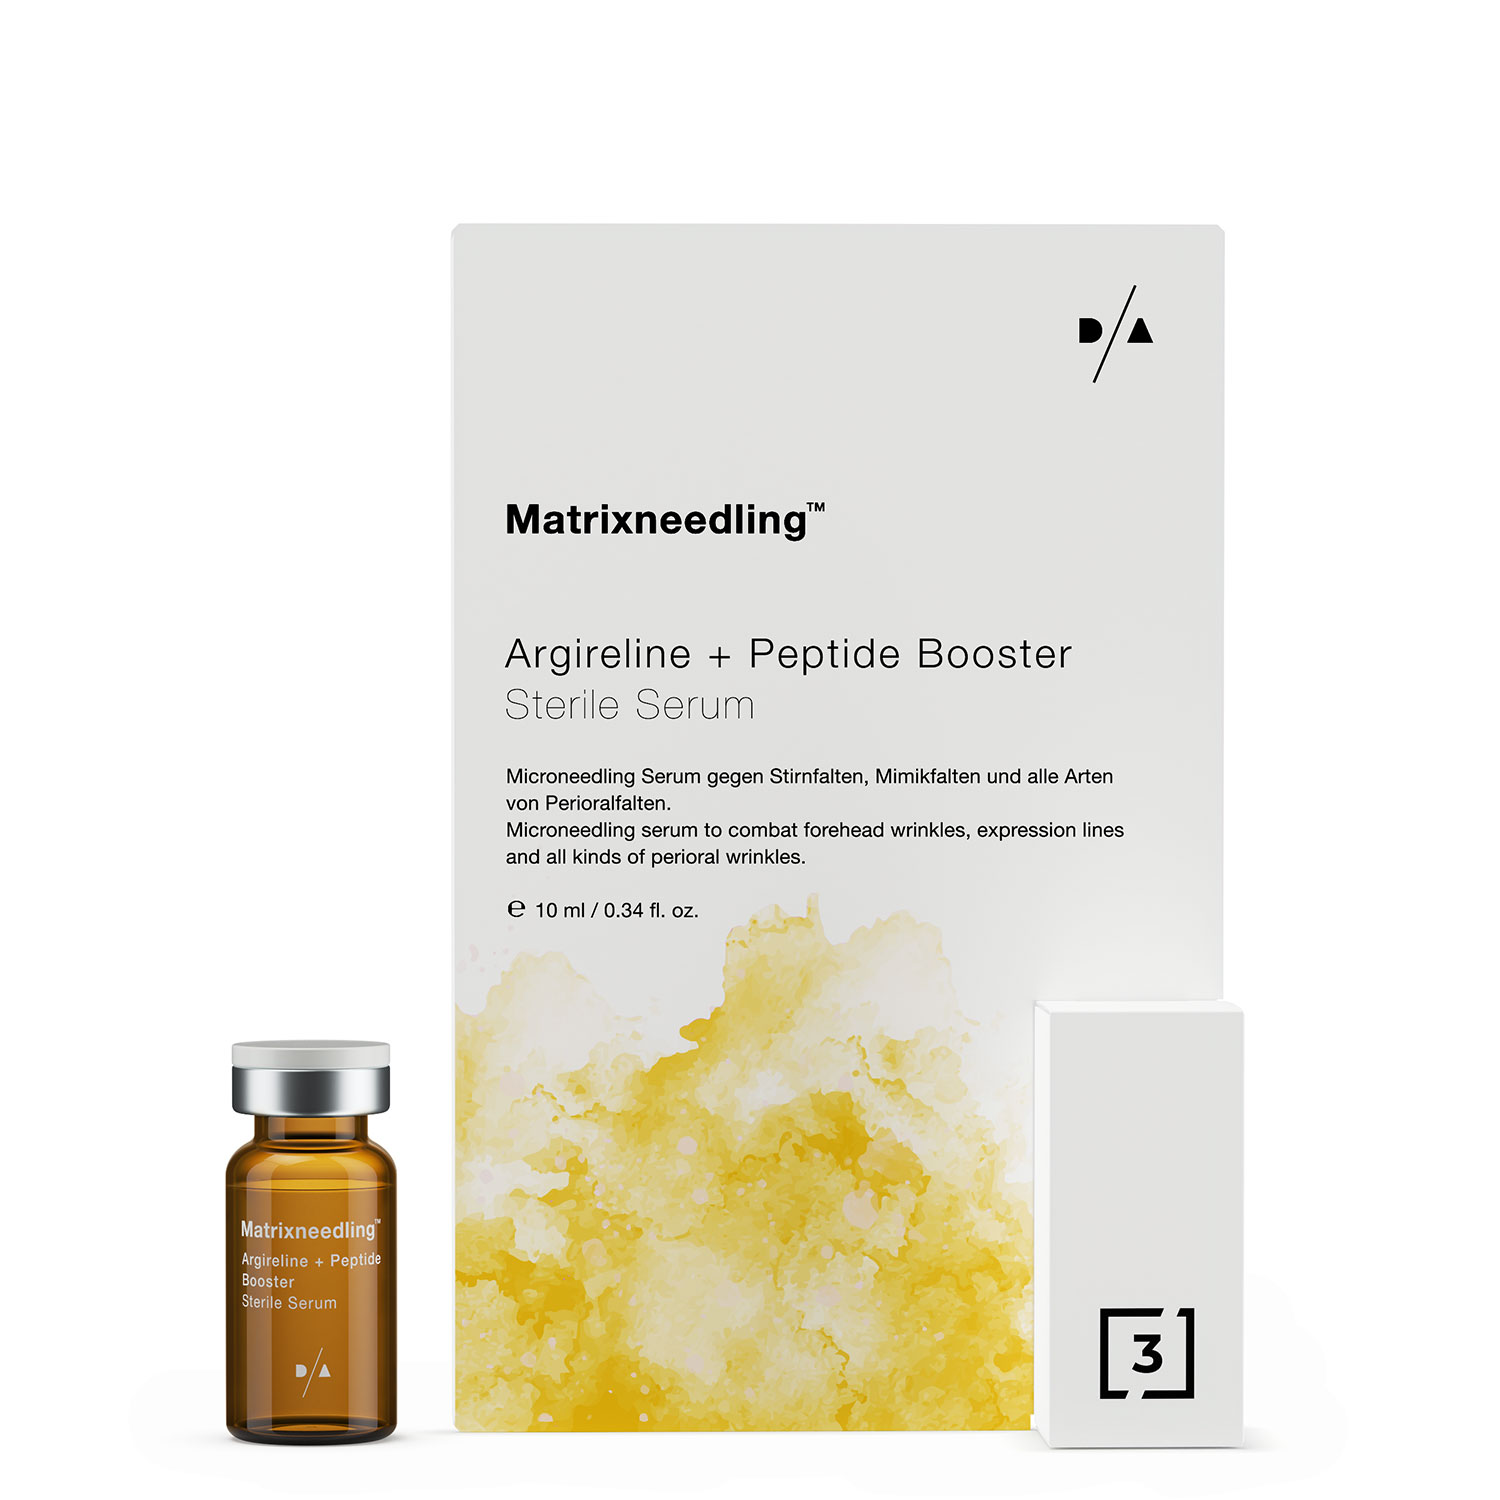 D/A Argireline + Peptide Booster